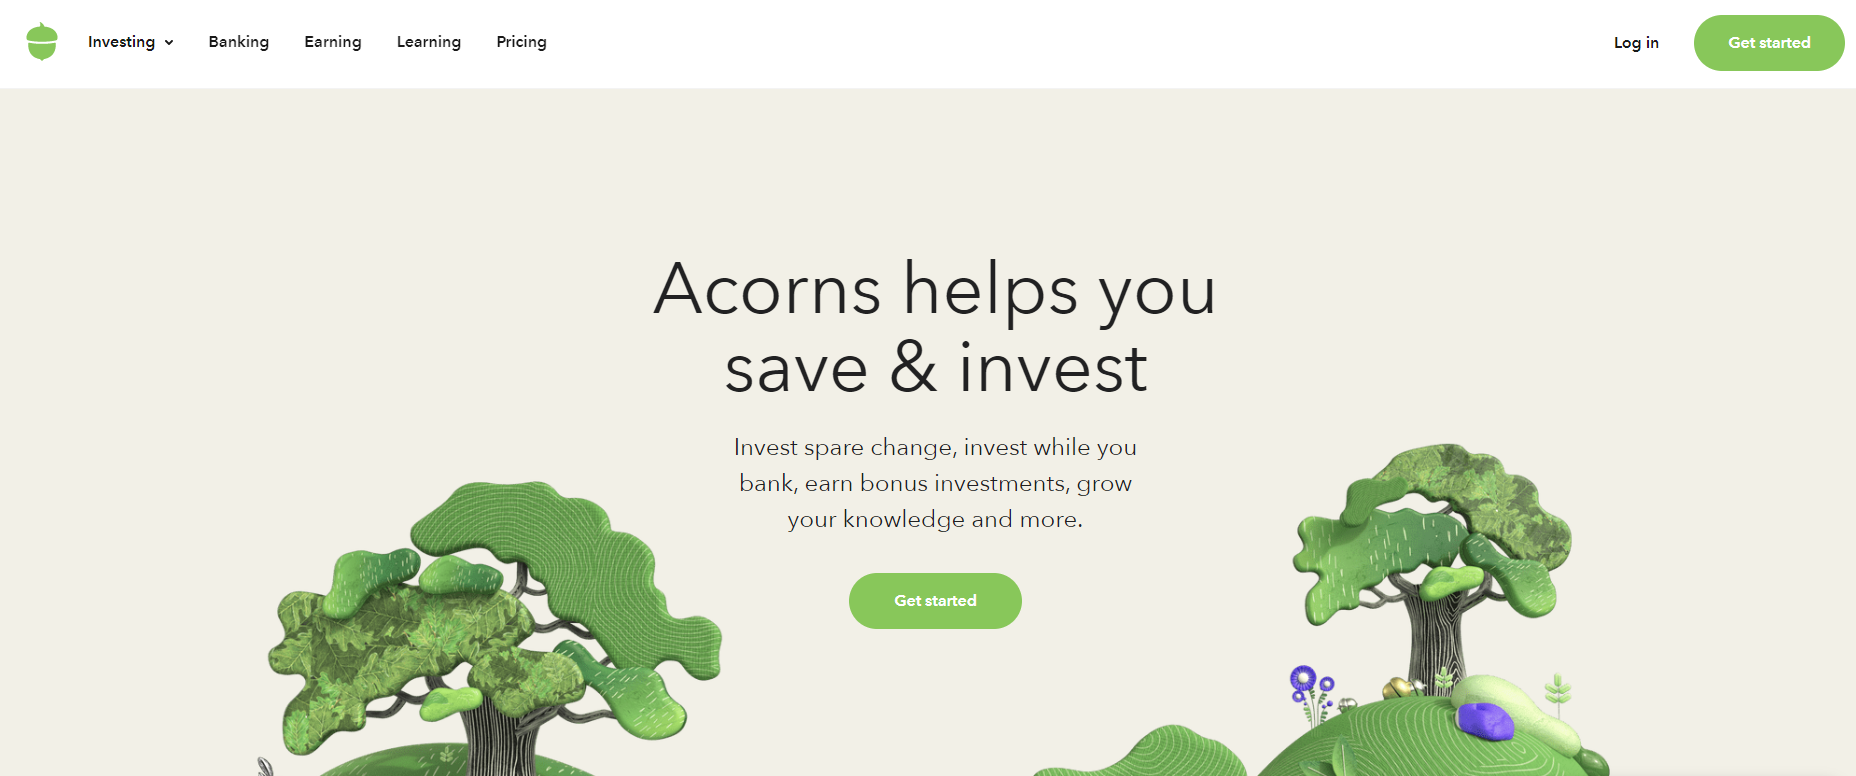 Acorns, a fintech company